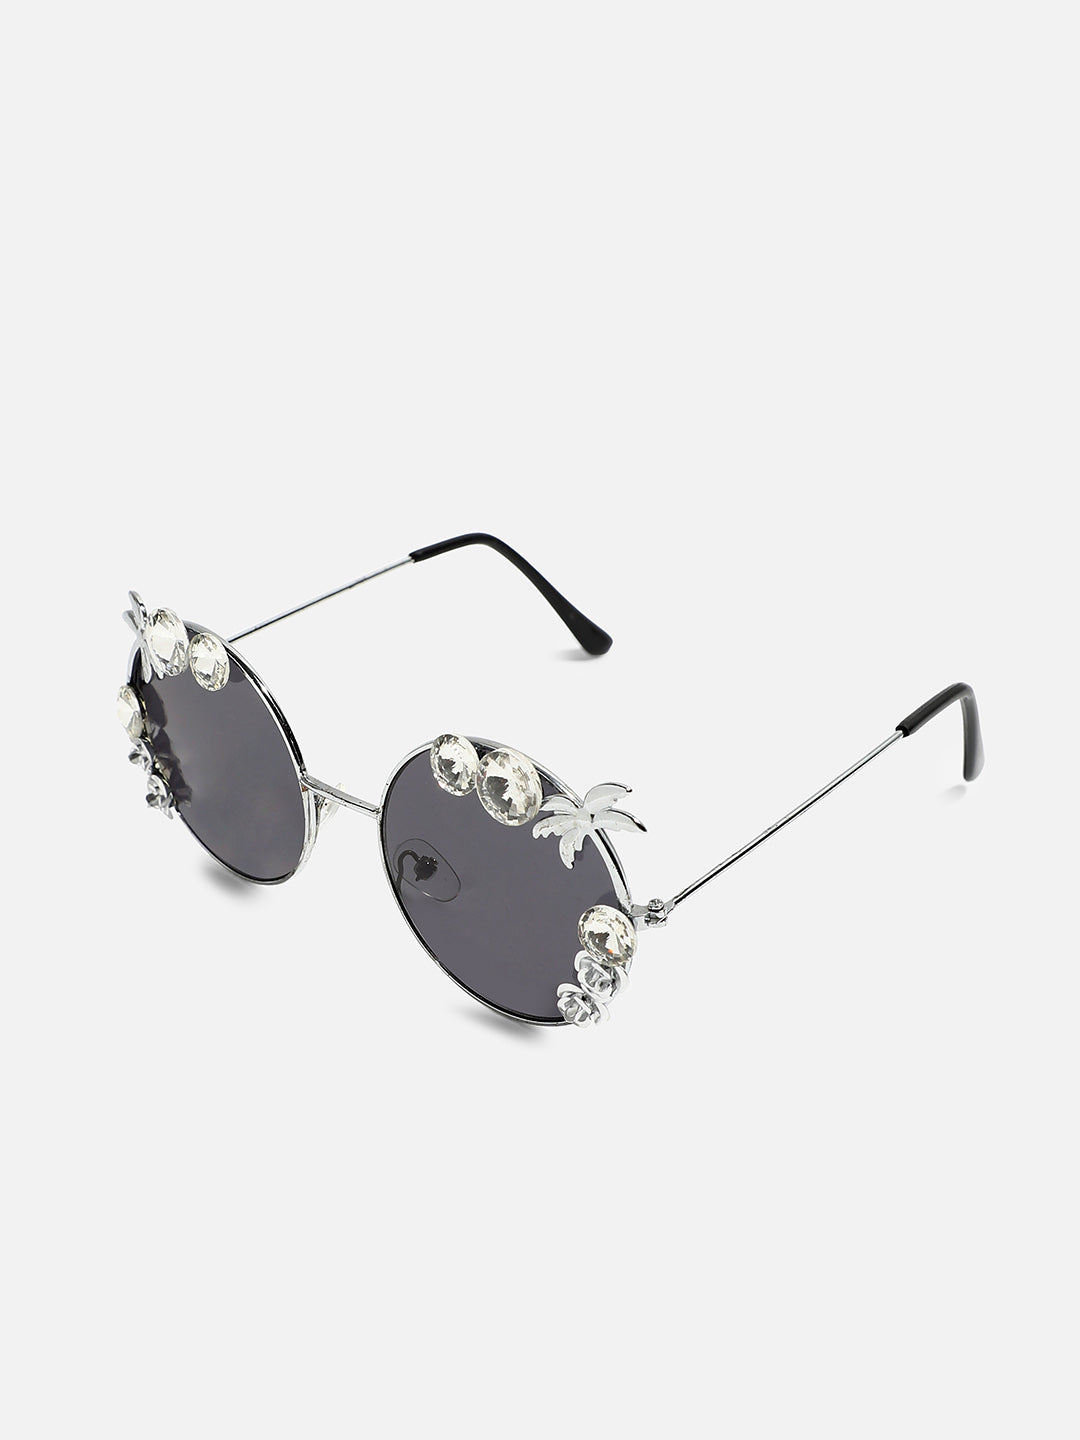 Glimmering Glam: Embellished Sunglasses